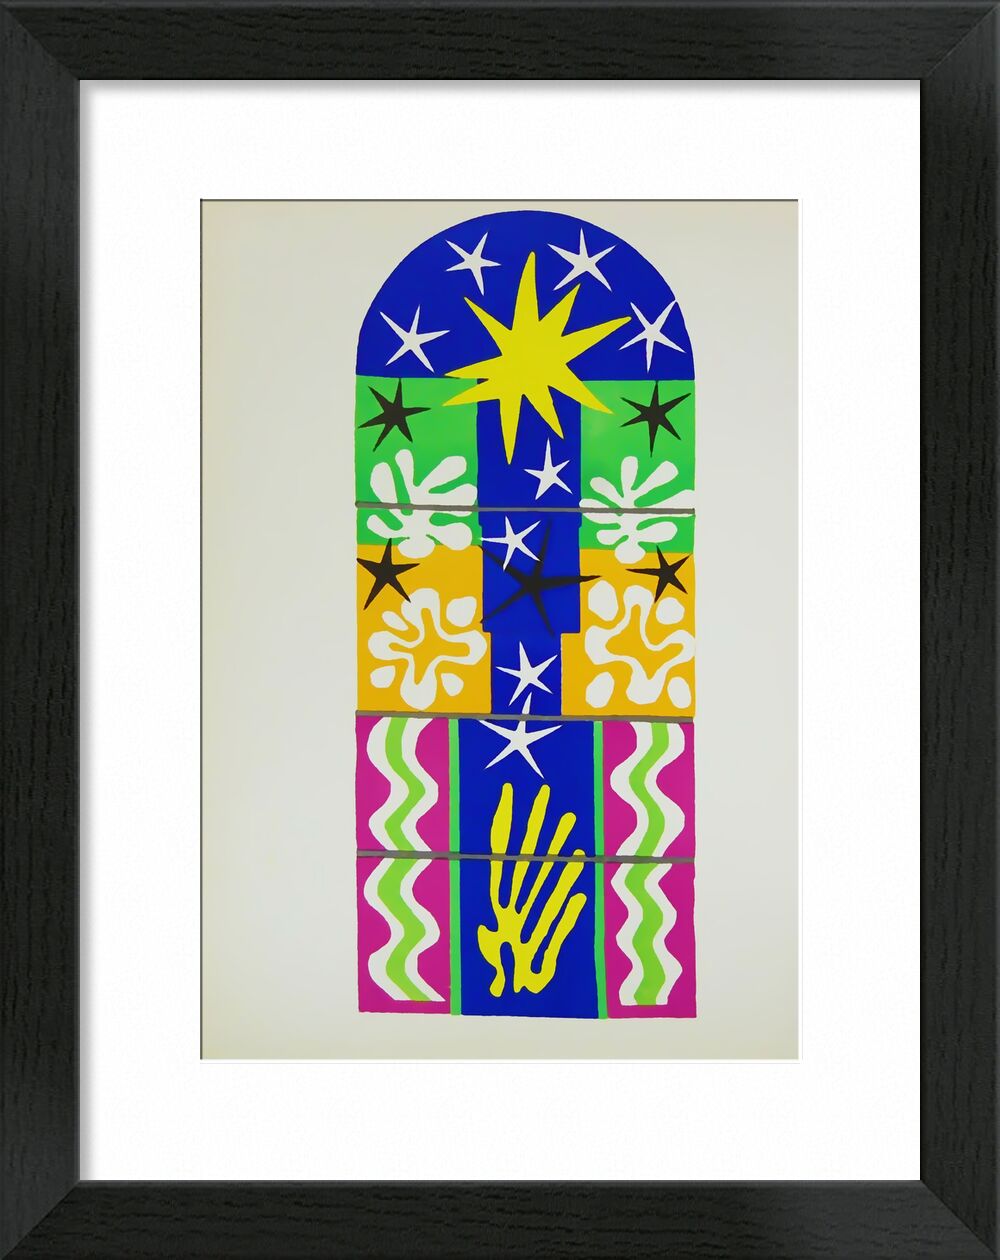 Verve, Christmas Night - Henri Matisse desde Bellas artes, Prodi Art, Matisse, Navidad, dibujo, collage